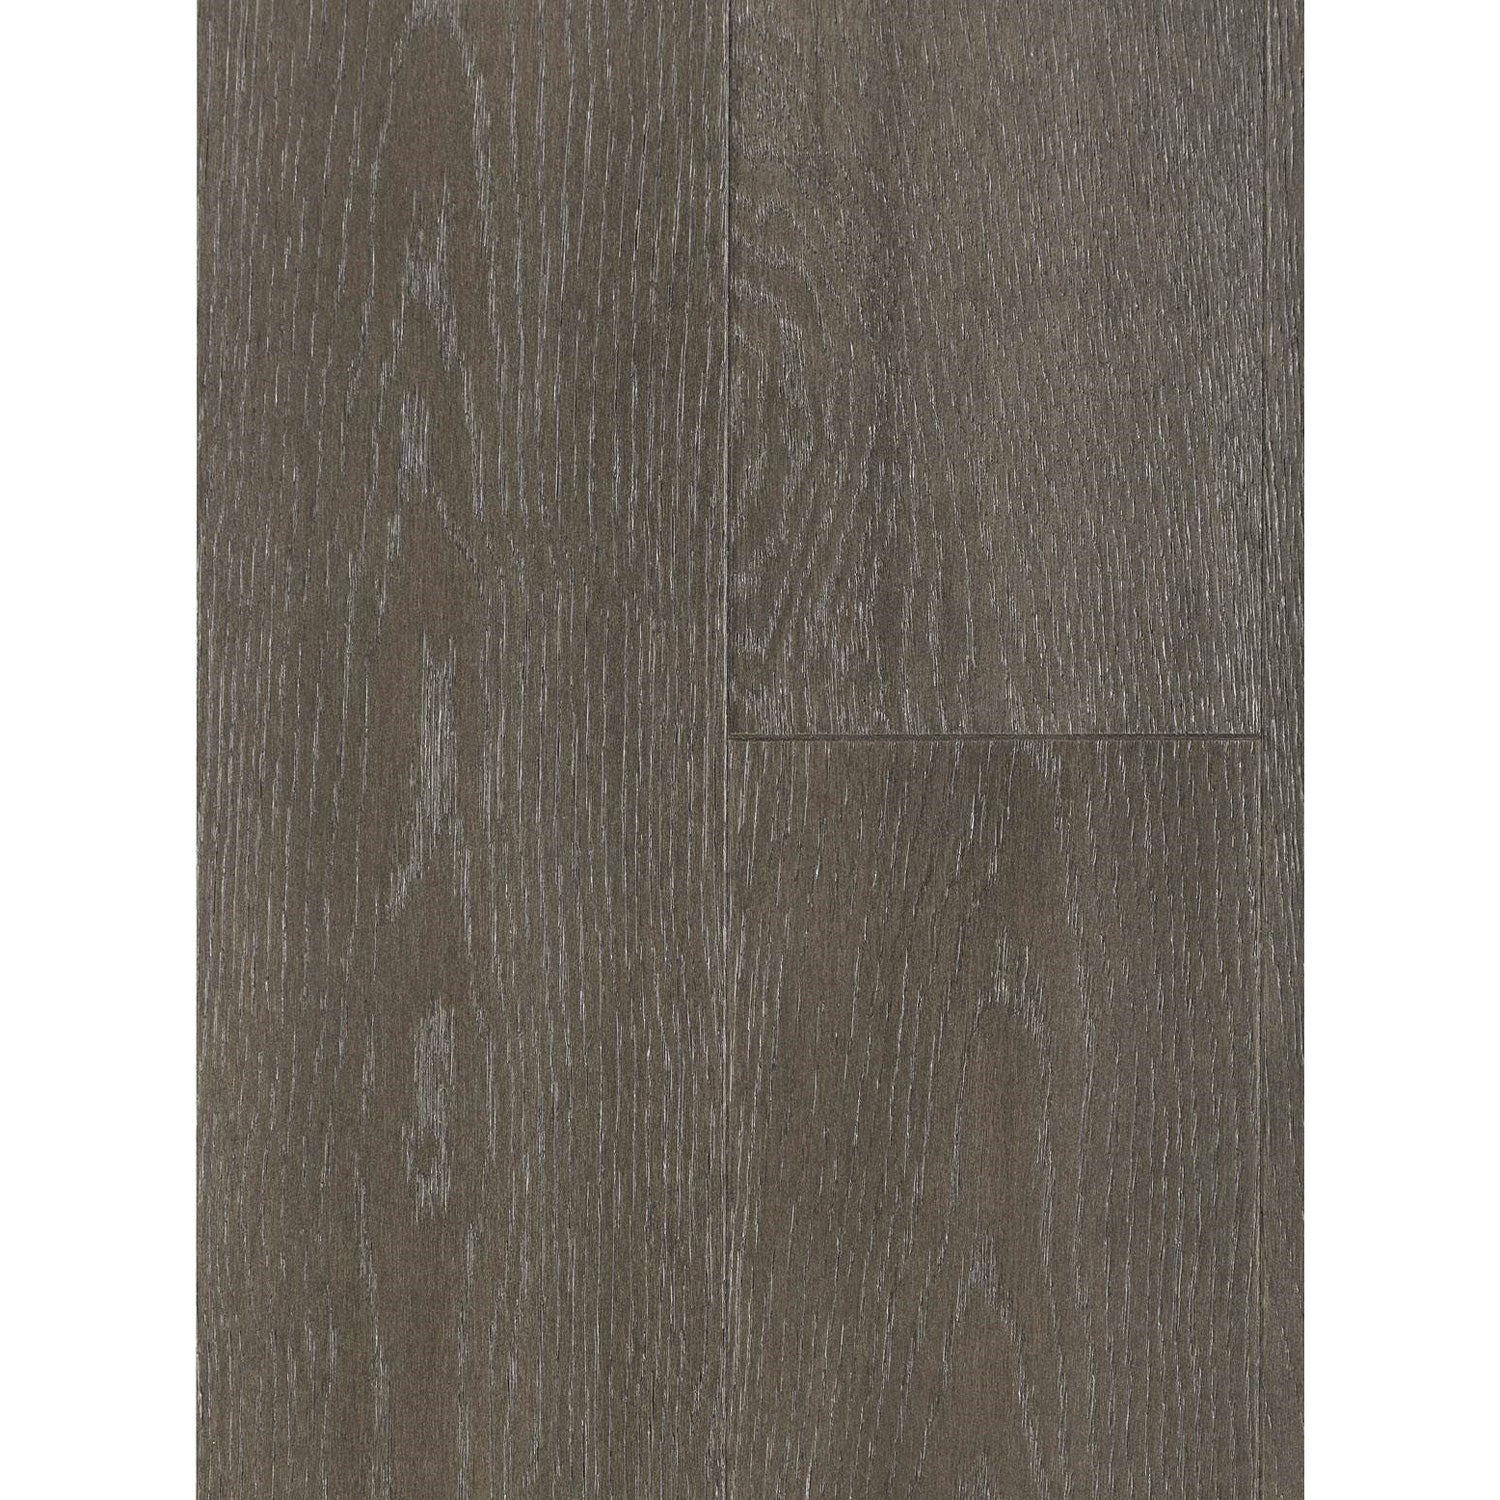 LM Flooring - Bentley Premier - Weathered Stone White Oak